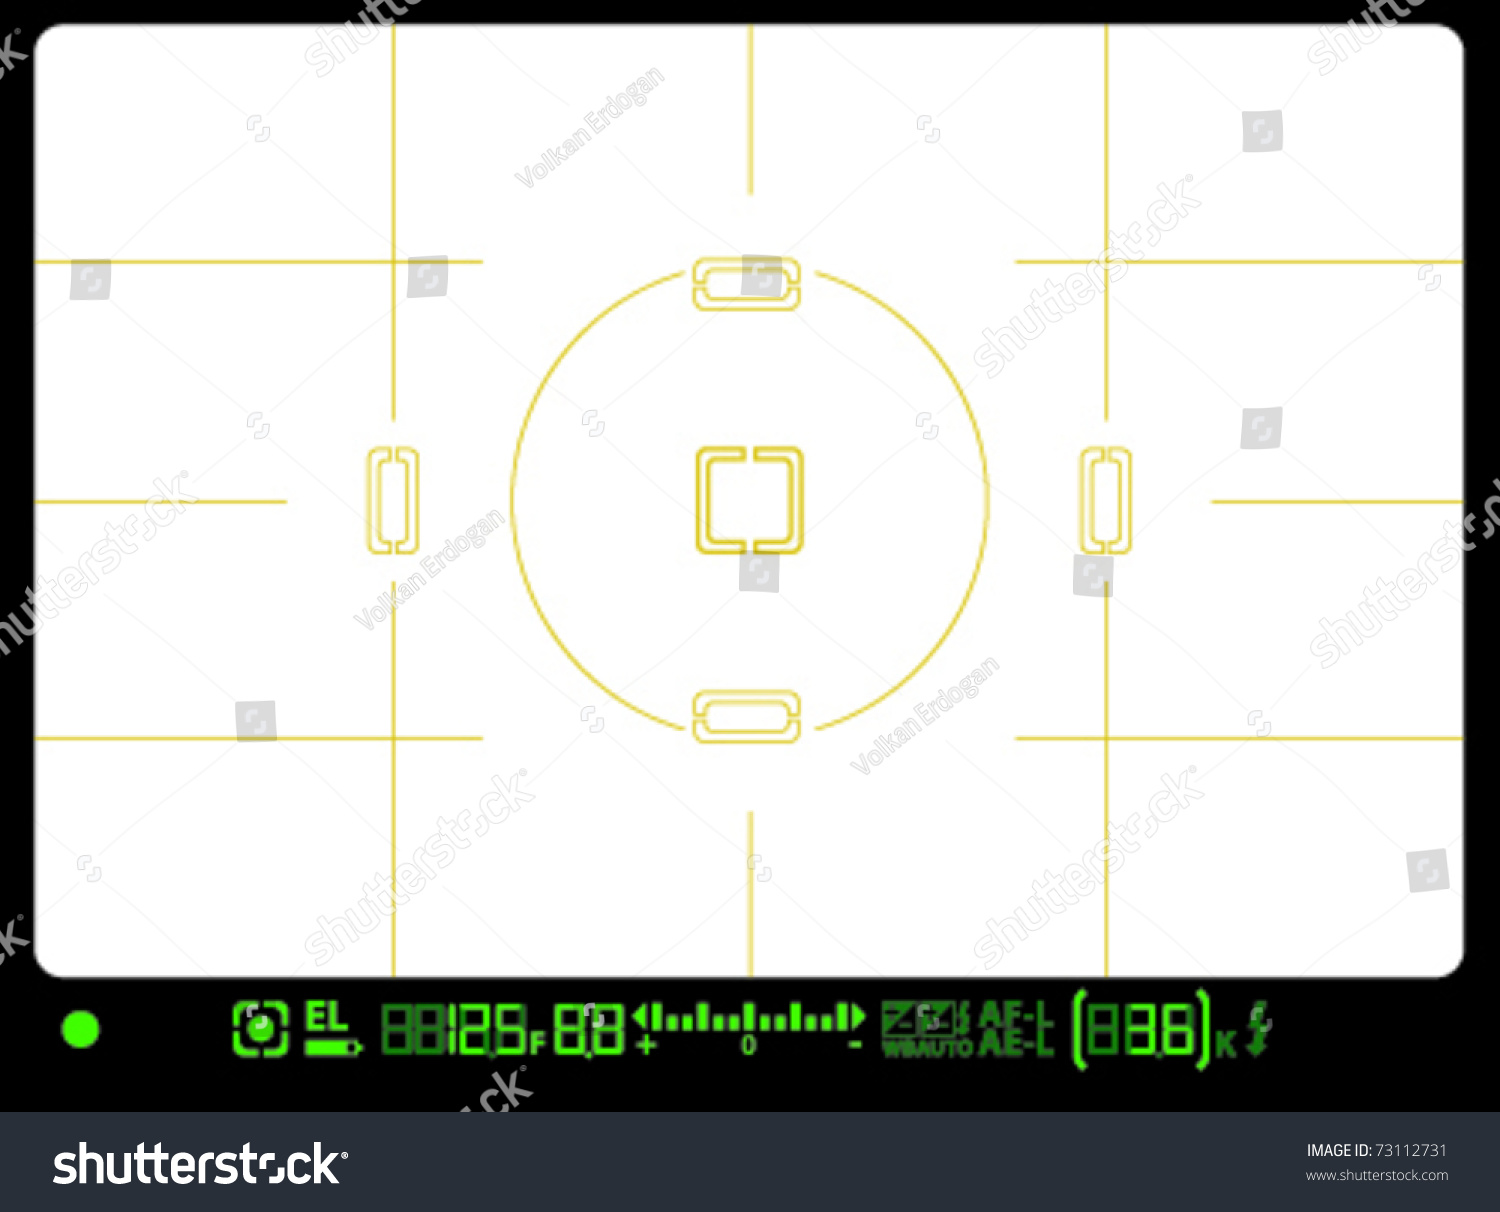 SVG of camera viewfinder, viewfinder with focal points svg